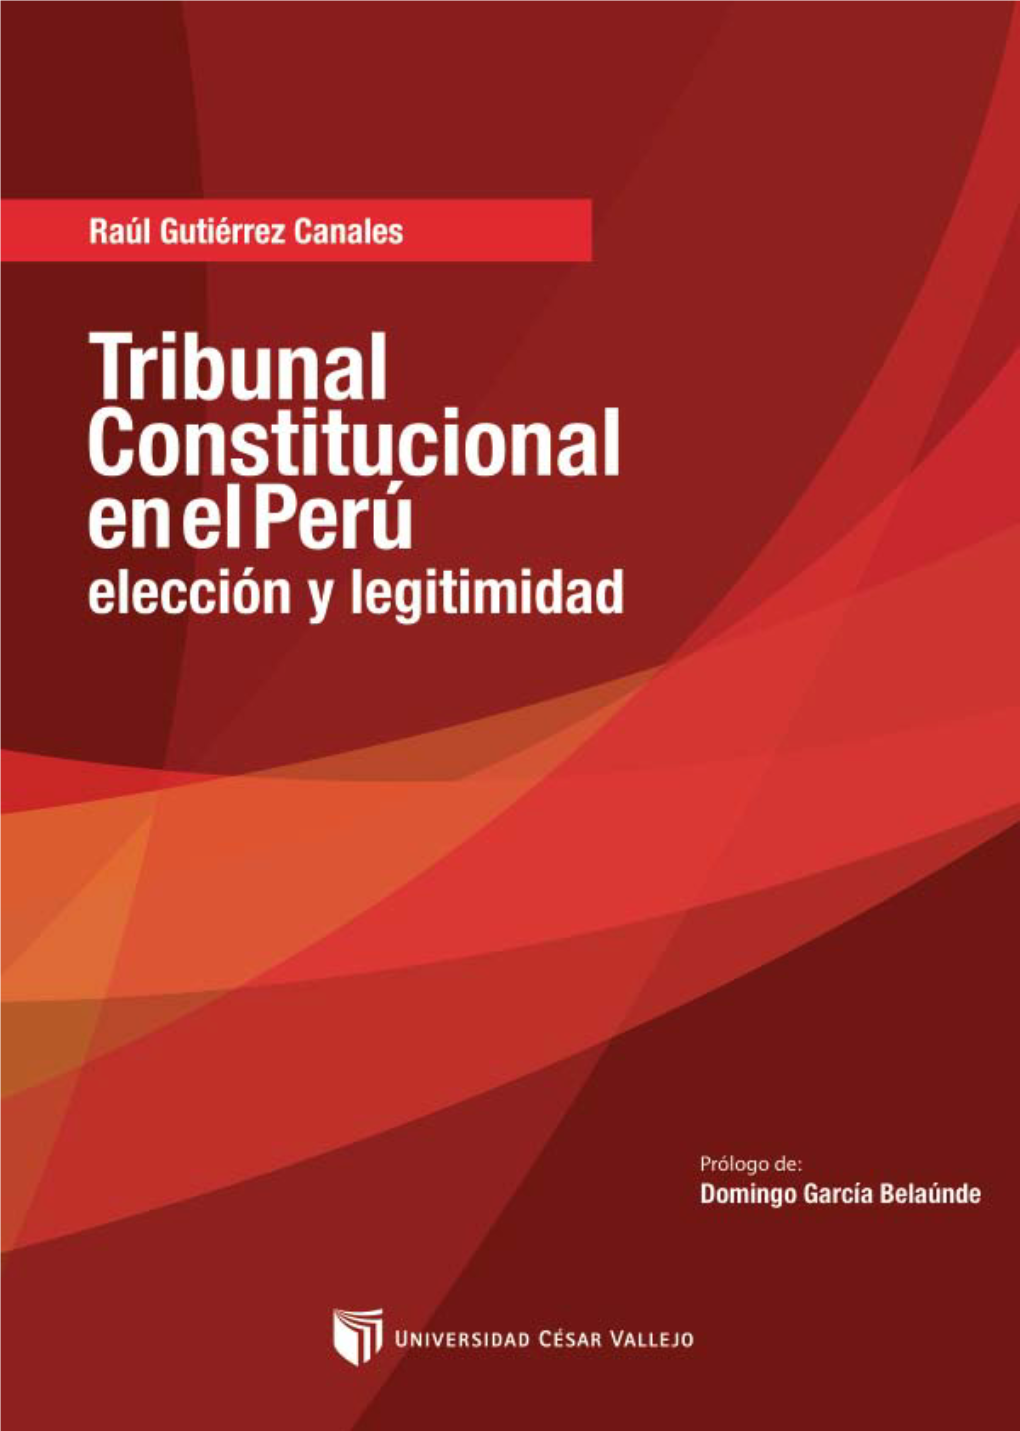 Gutierrez-Raul Tribunal-Constitucional-En-El-Peru.Pdf